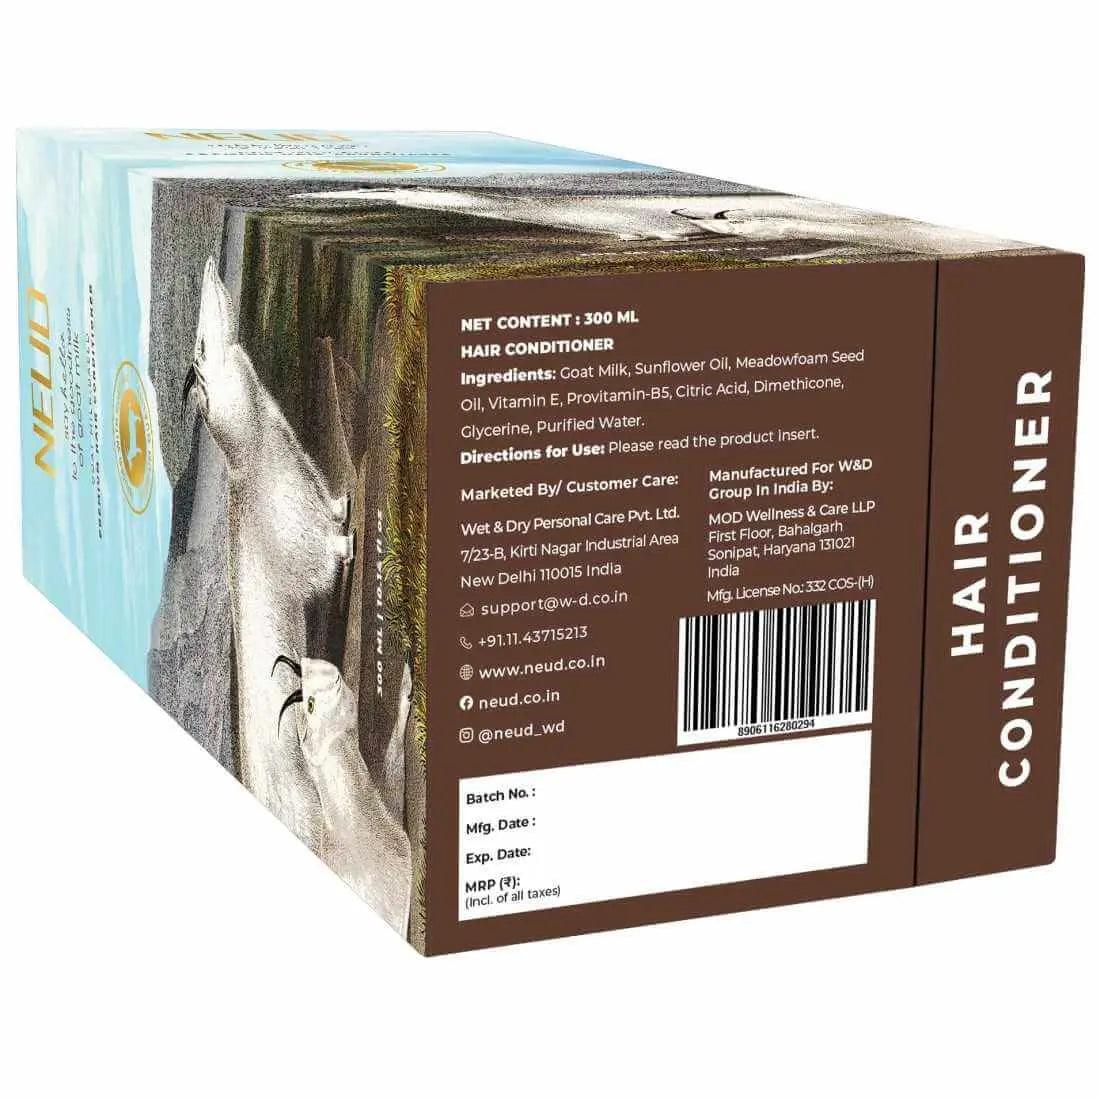 NEUD Goat Milk Hair Conditioner for Men & Women - 300 ml with Free Zipper Pouch